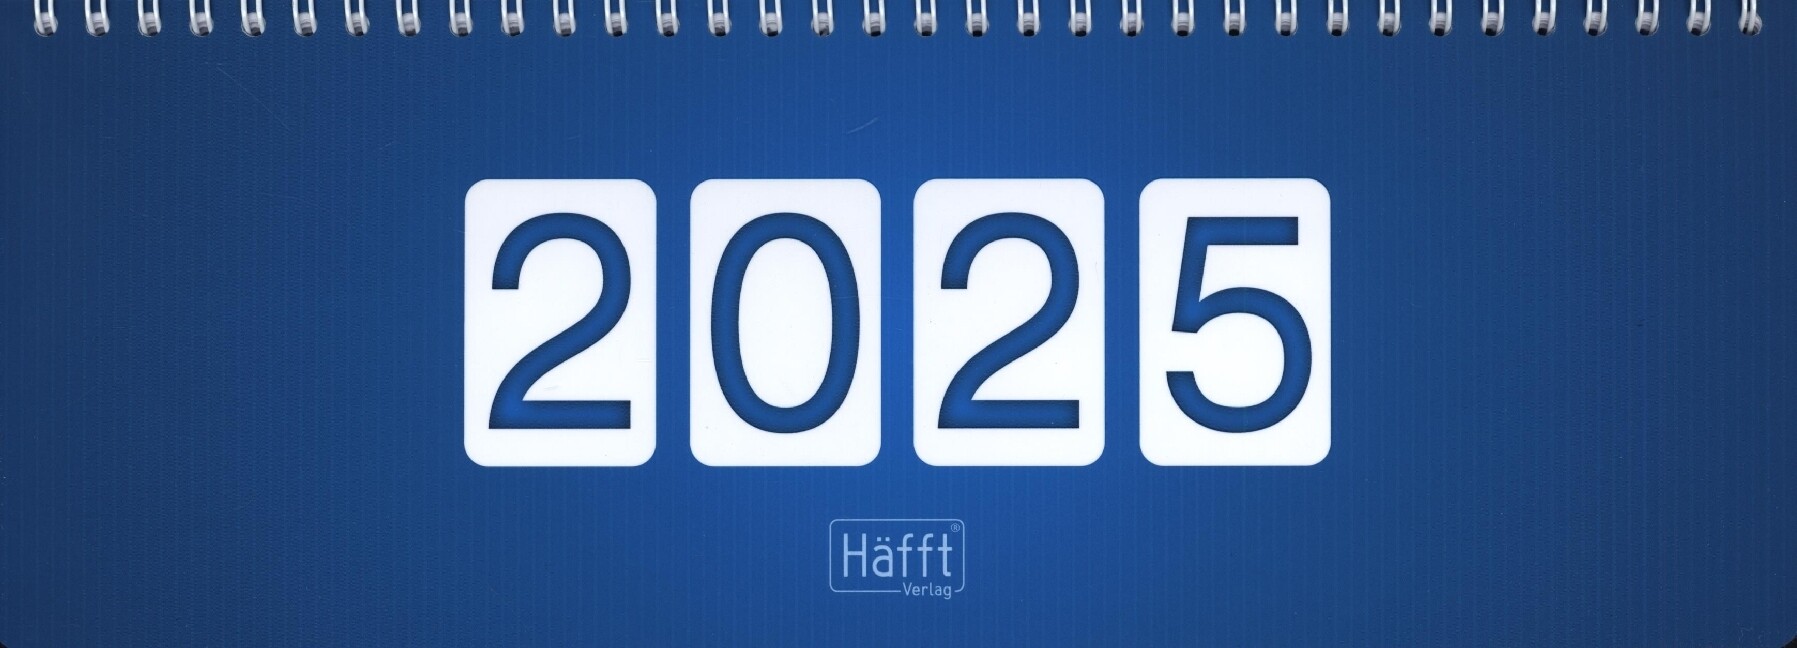 Tischkalender 2025 [Königsblau]